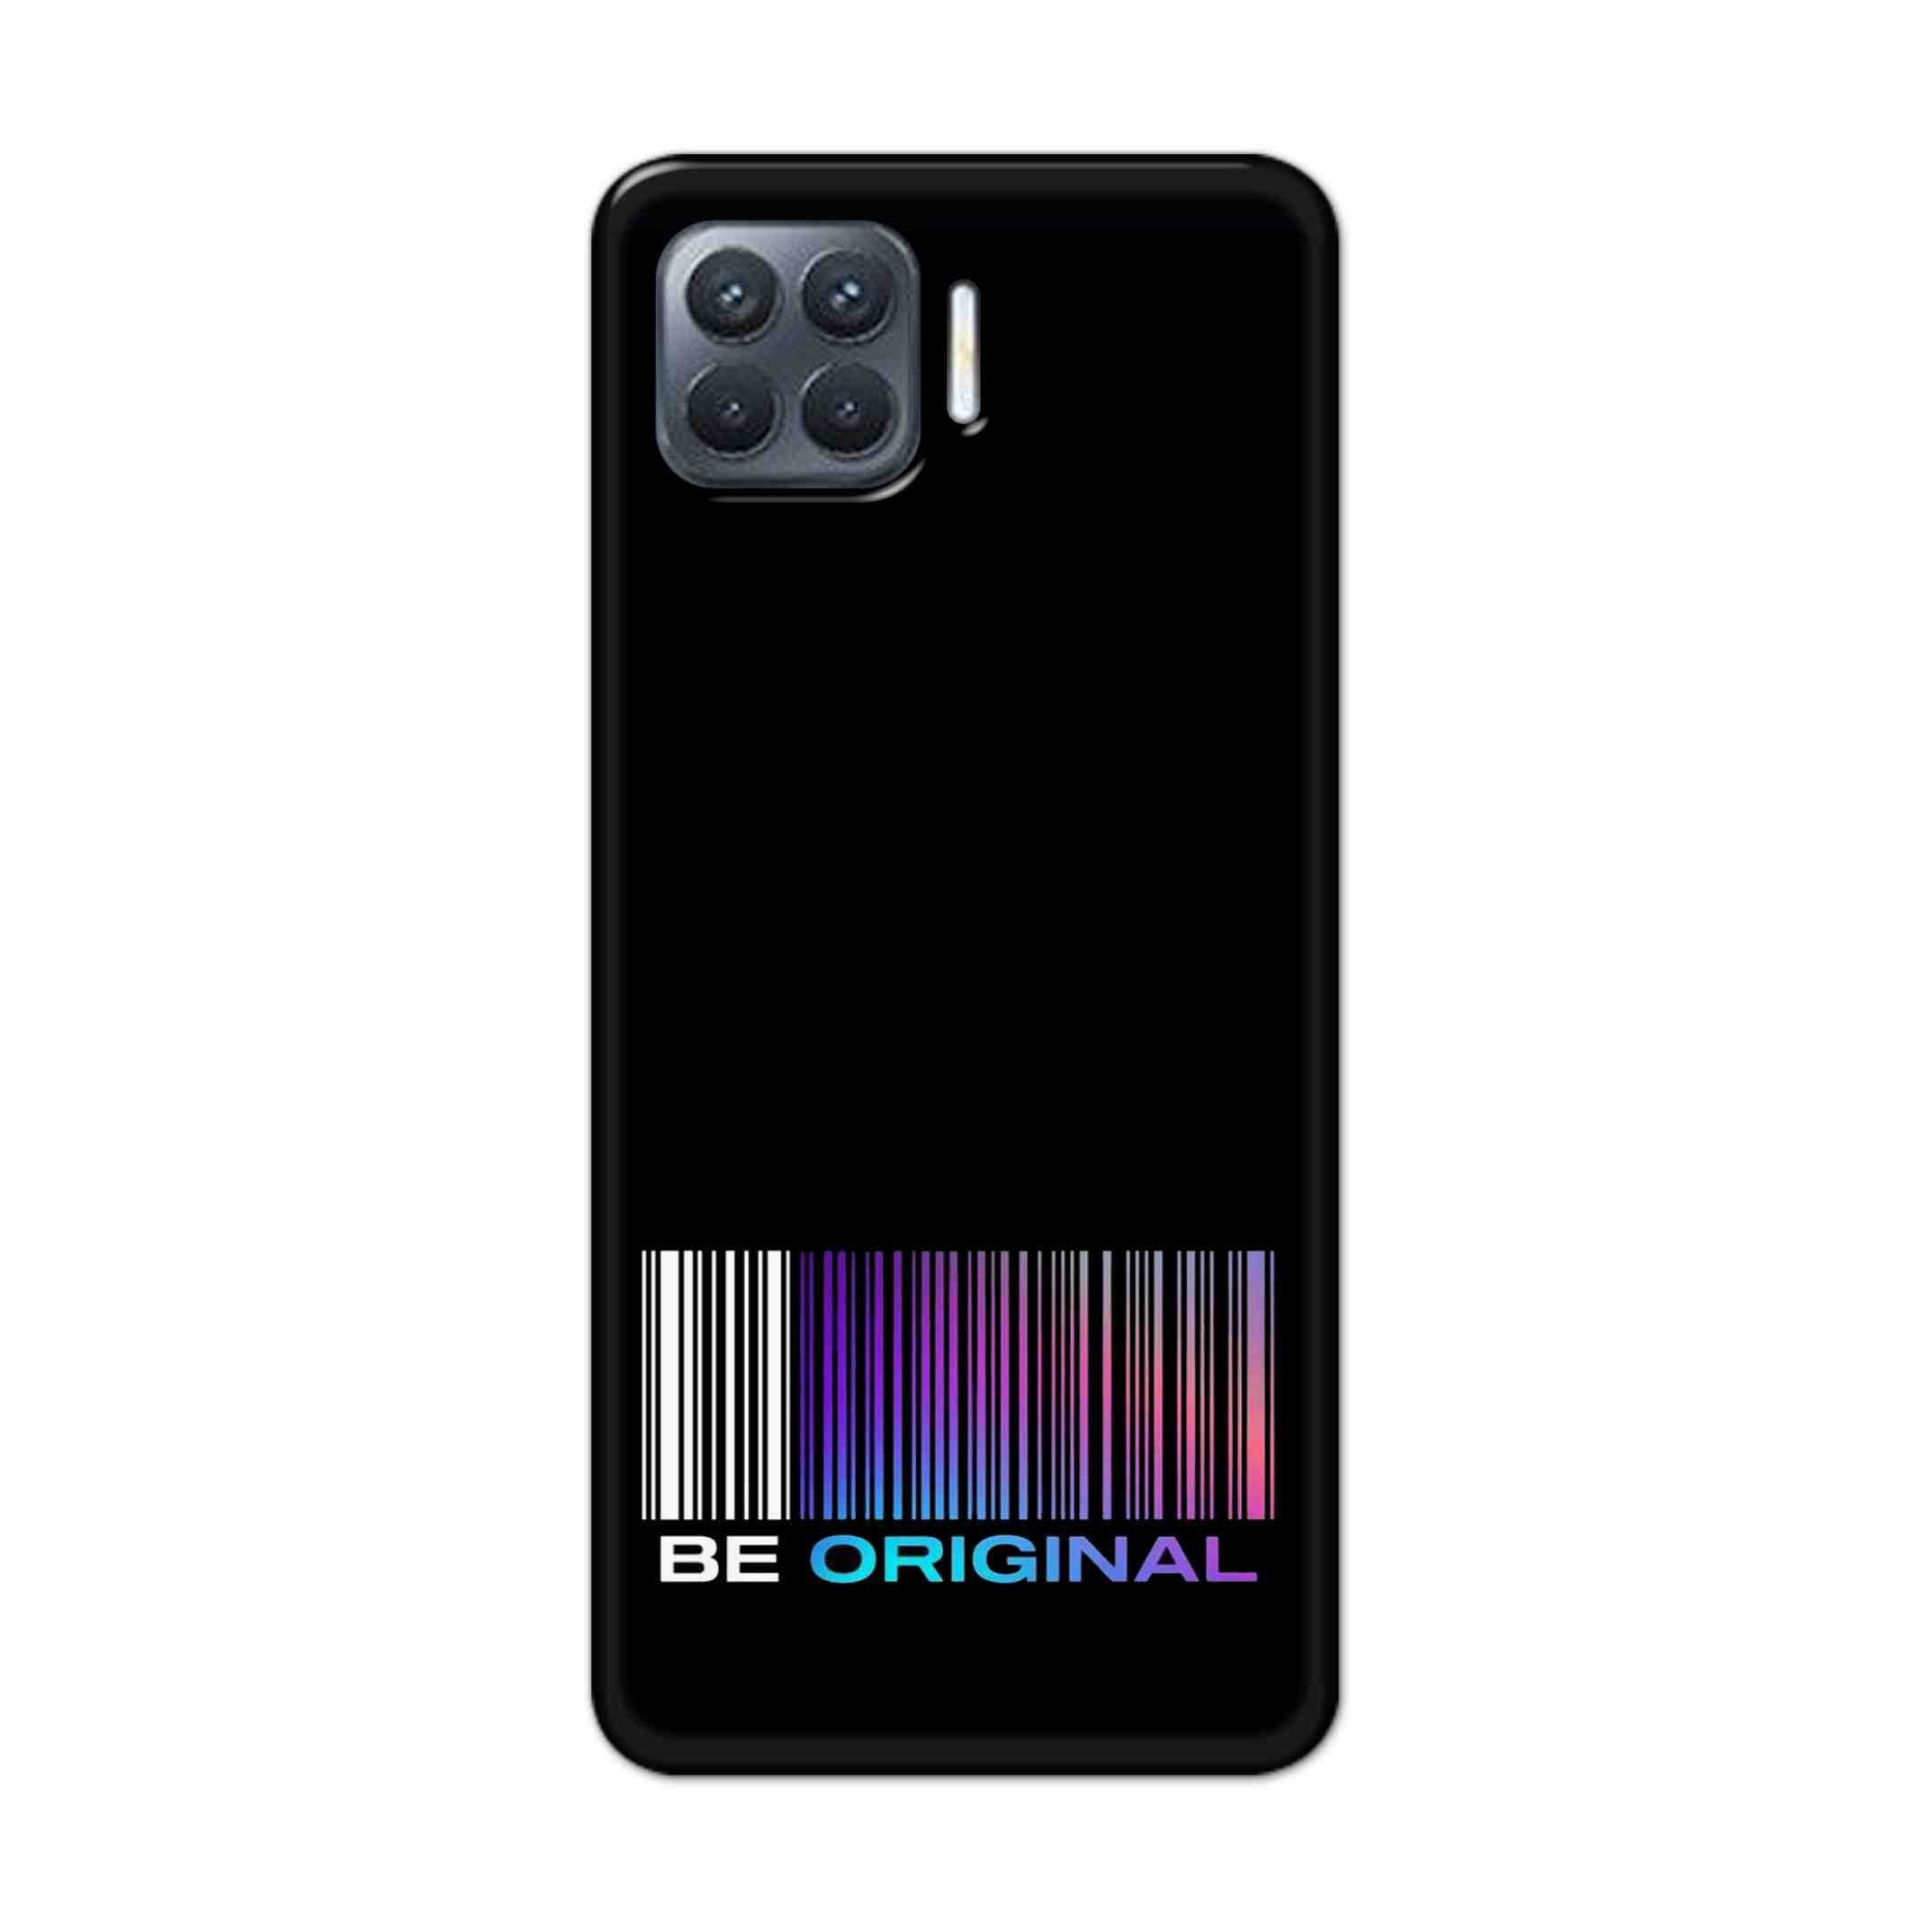 Buy Be Original Hard Back Mobile Phone Case Cover For Oppo F17 Pro Online